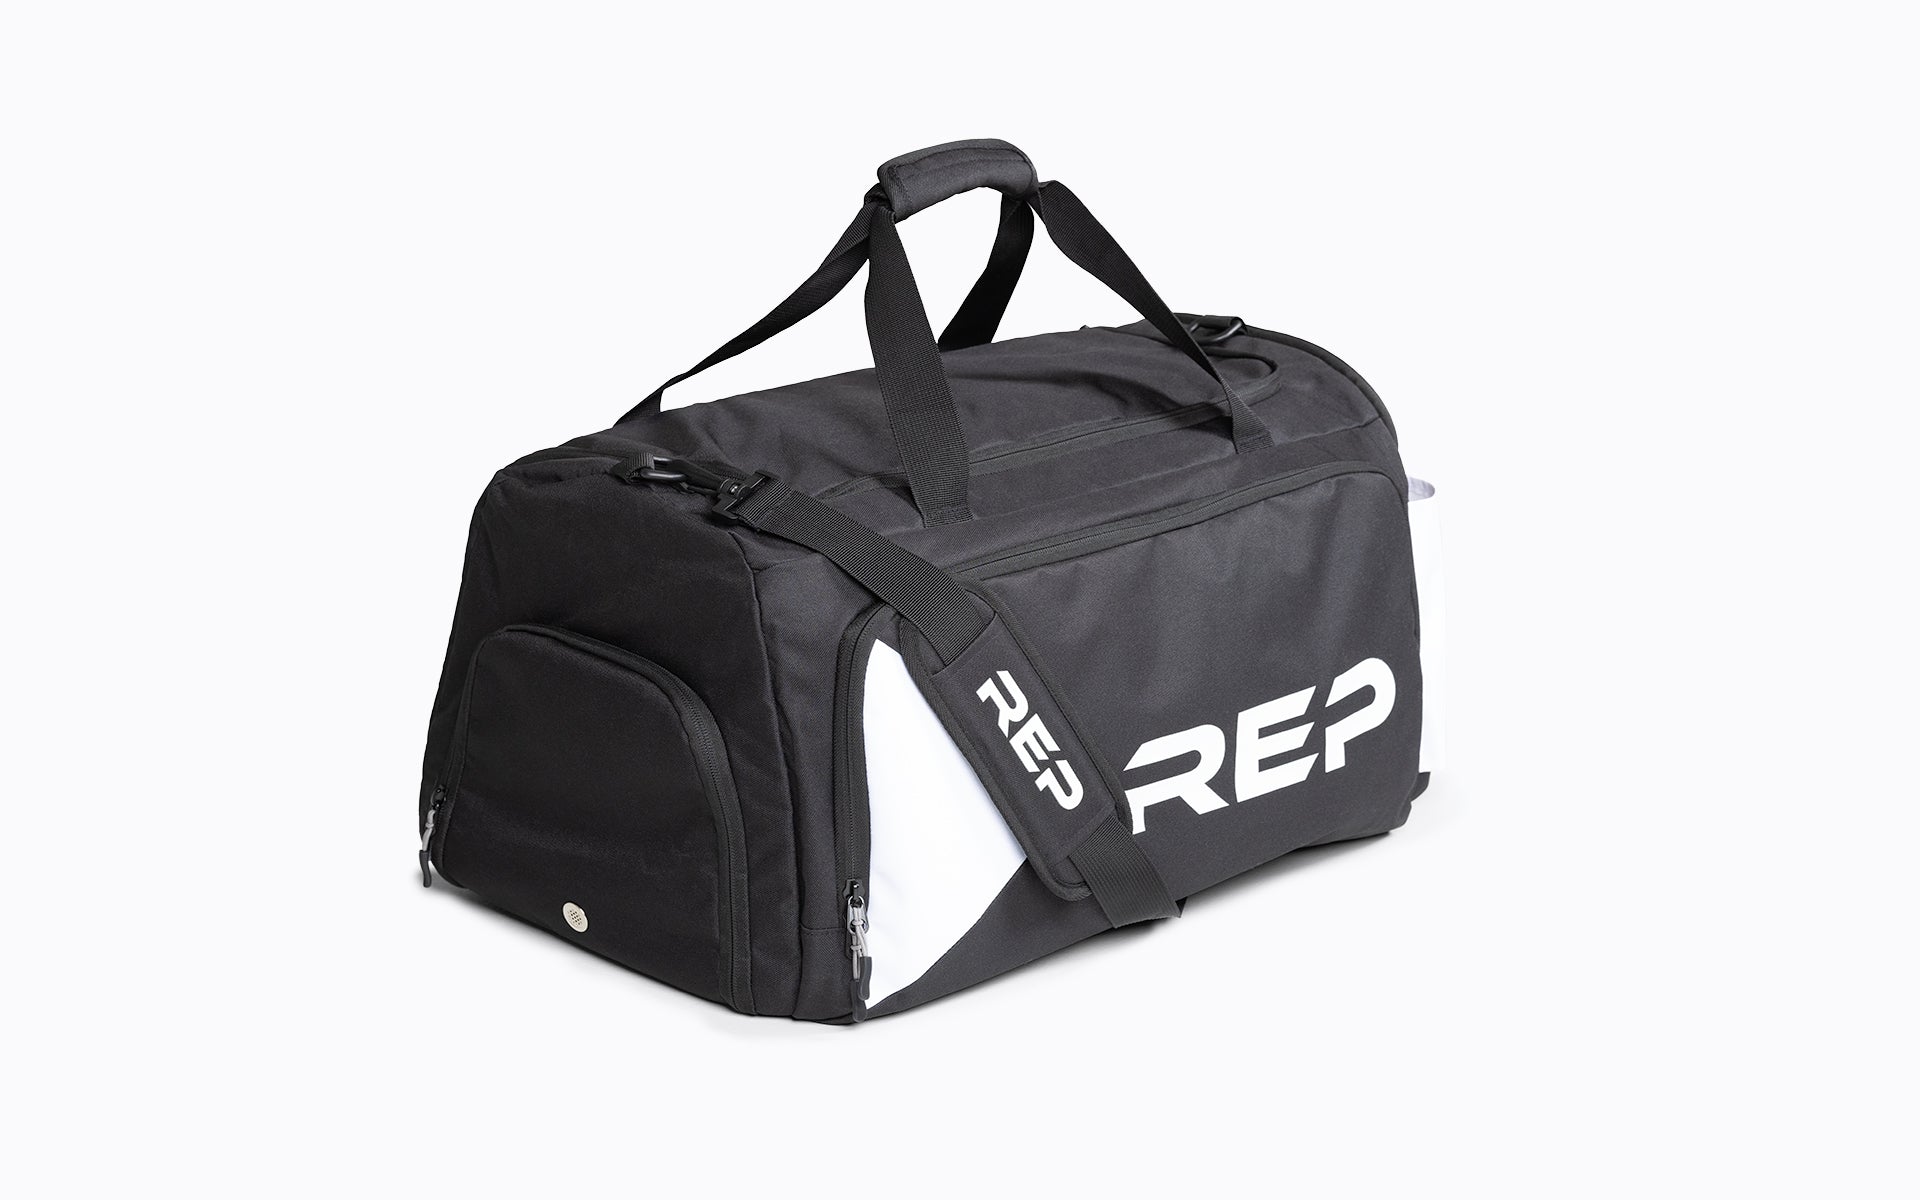 Angled view of black and white REP Gym Bag